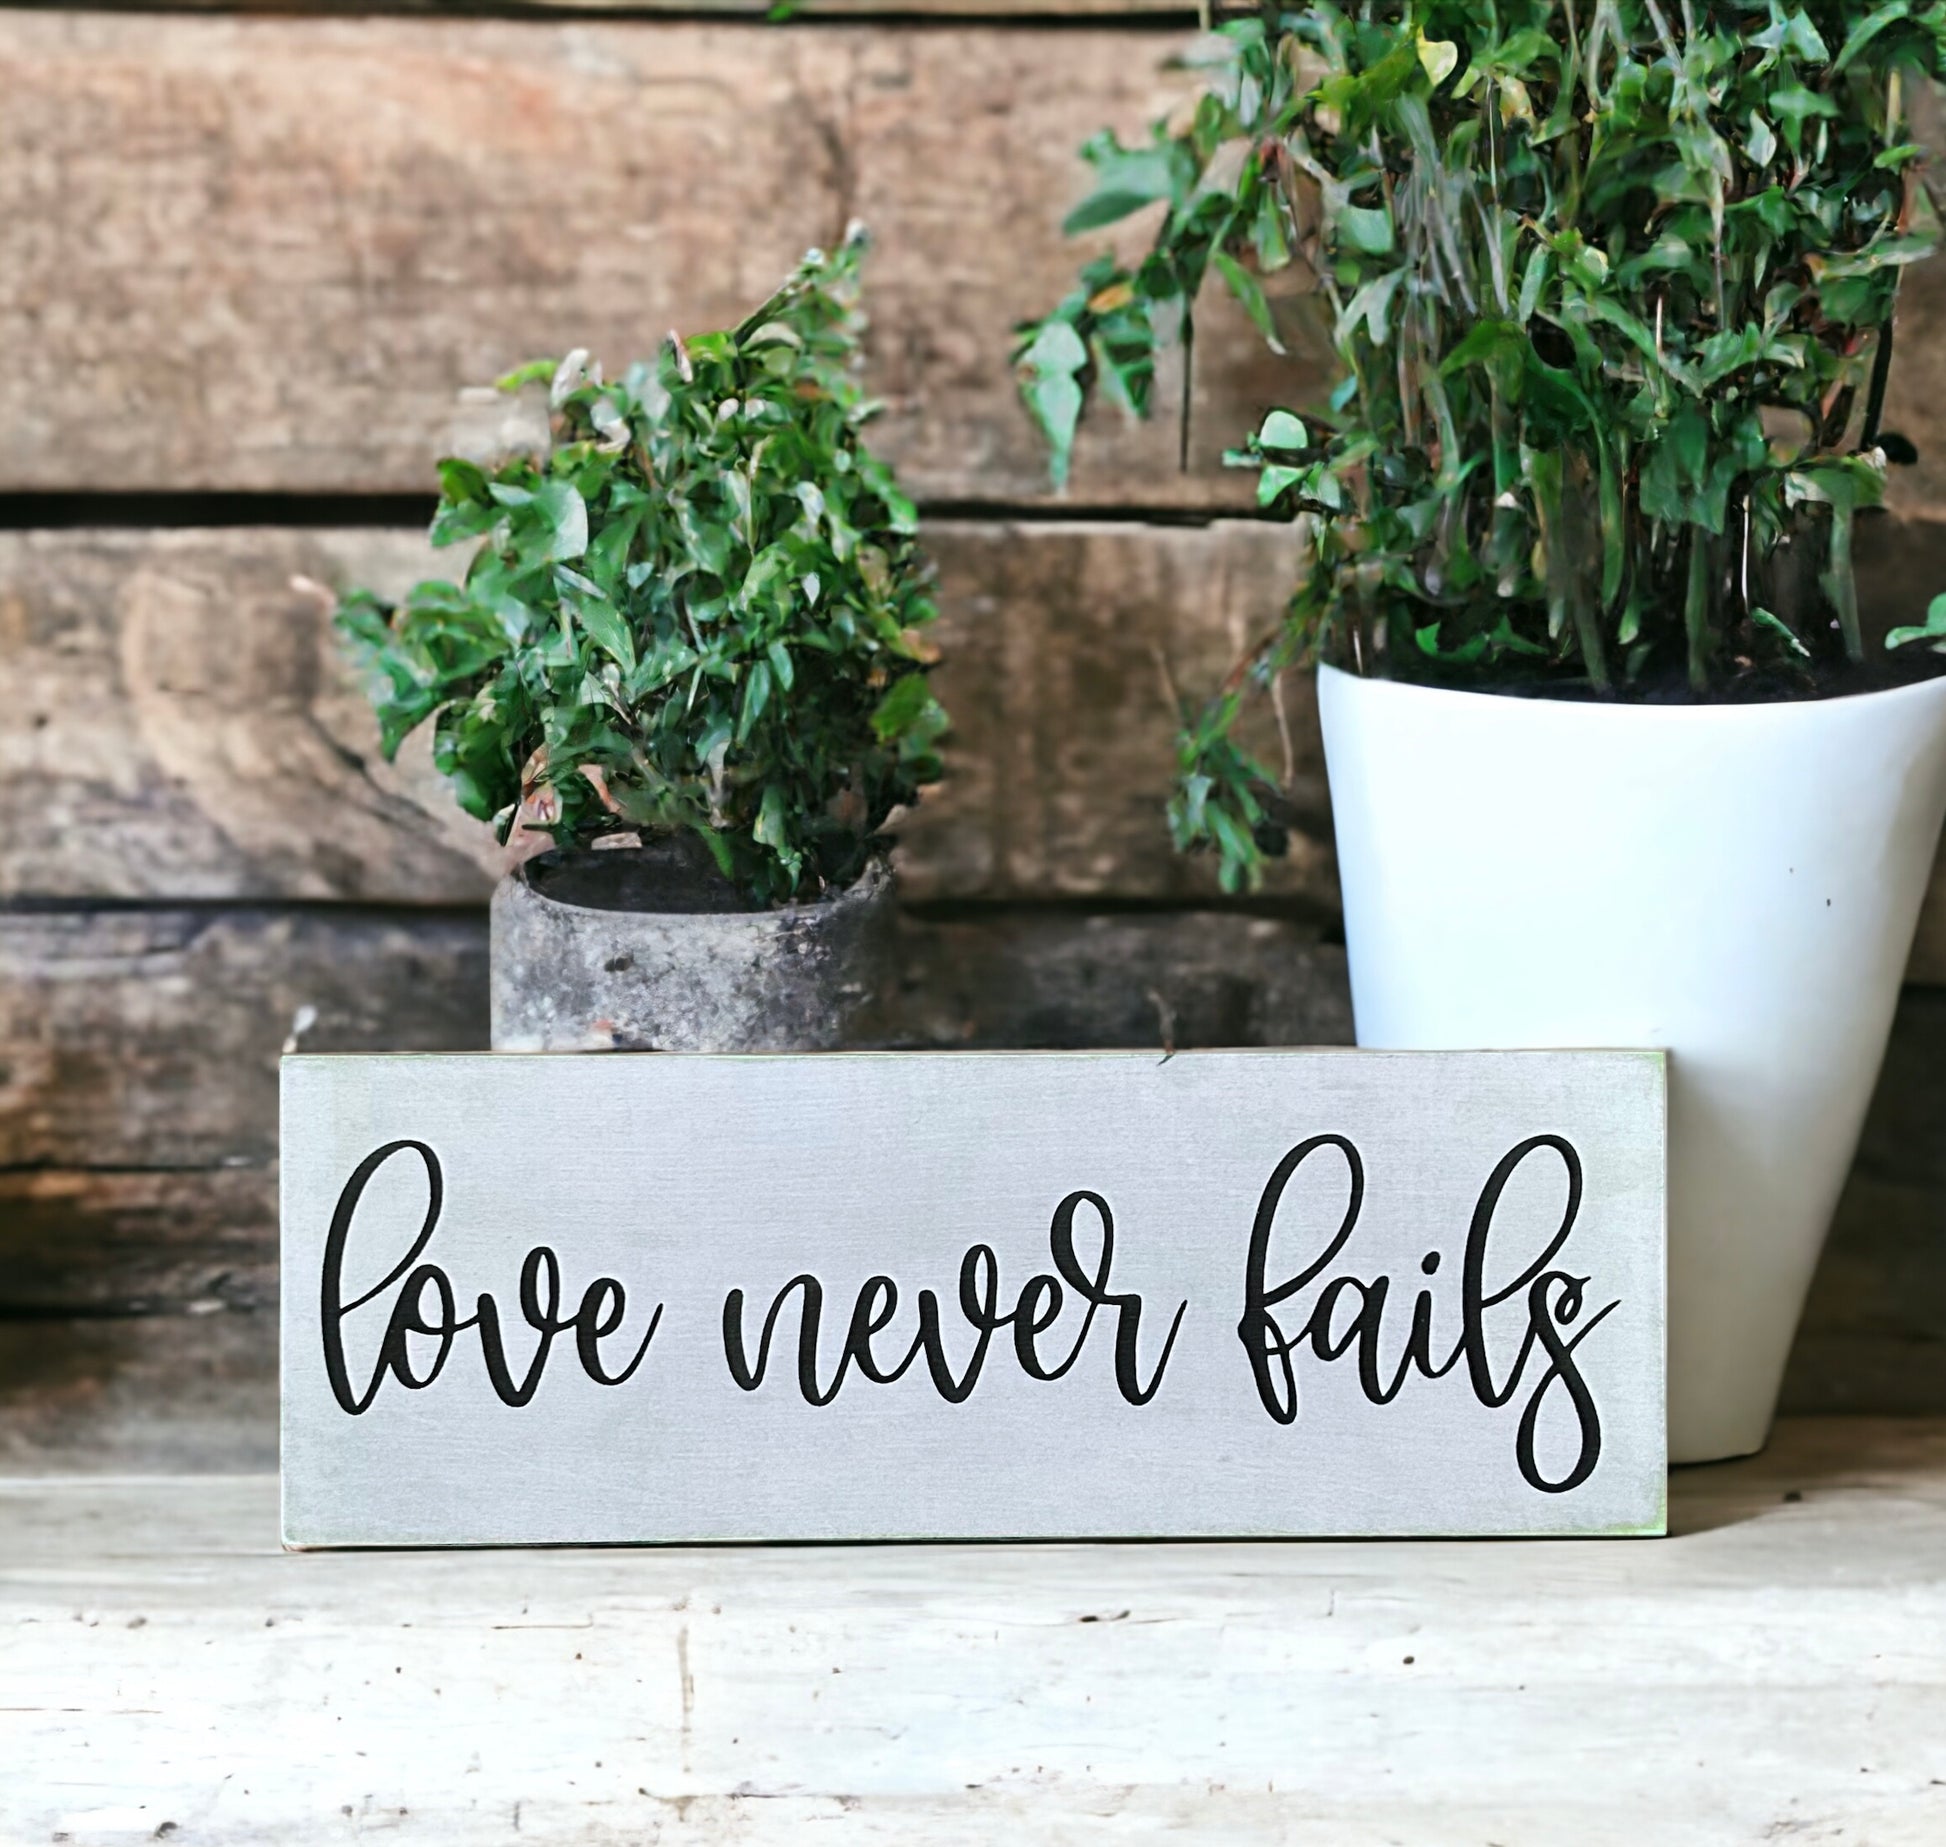 "Love never fails" wood sign